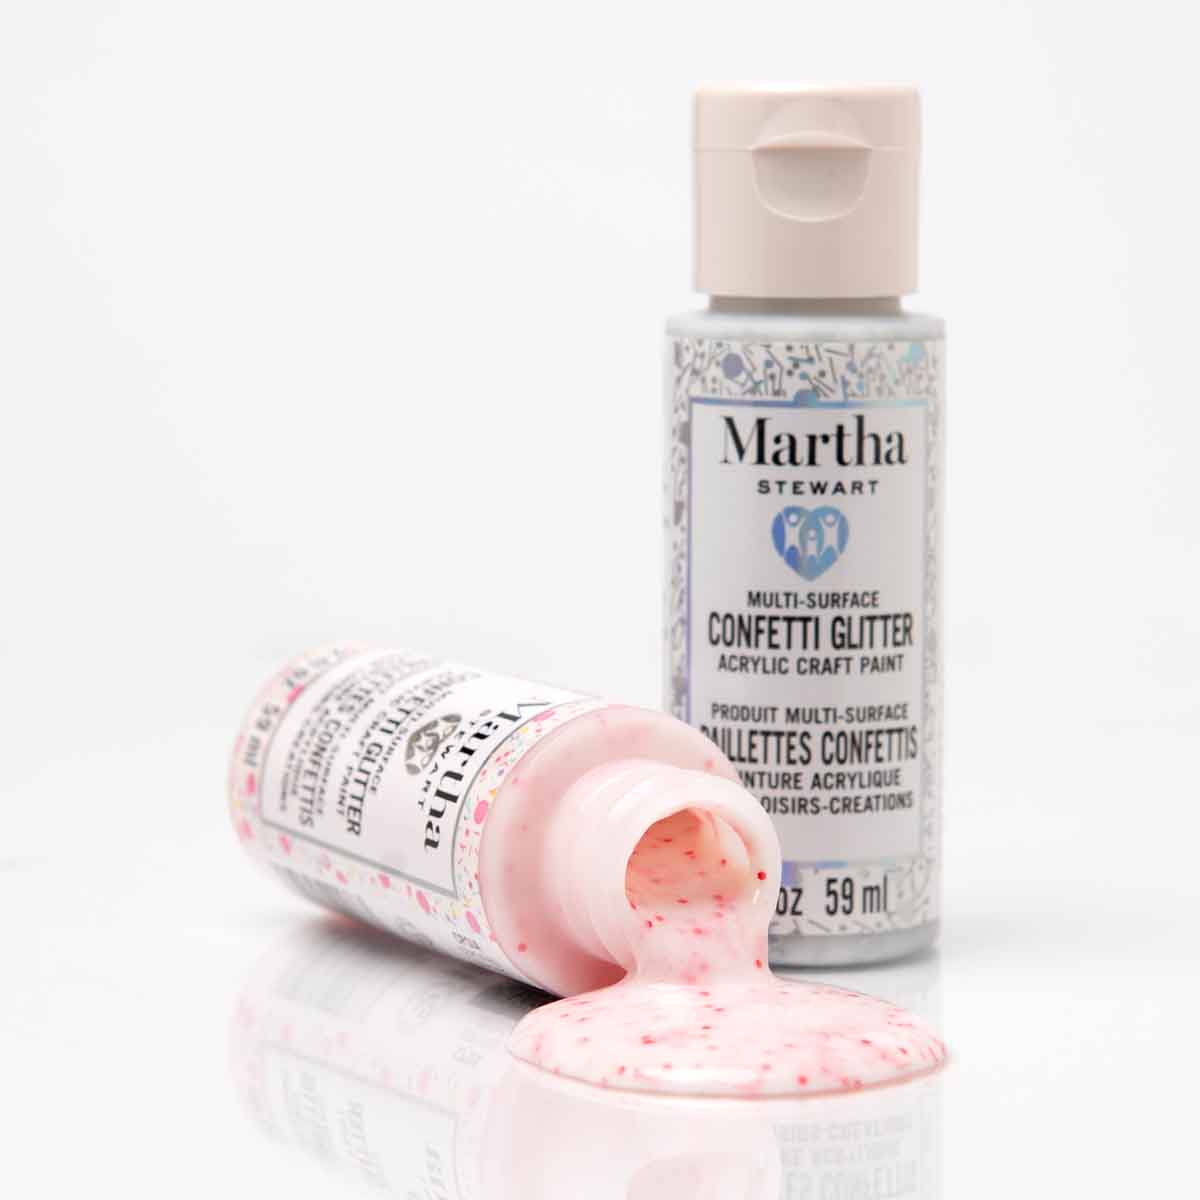 Martha Stewart ® Family Friendly Multi-Surface Confetti Glitter Acrylic Craft Paint 6-Color Set - MS